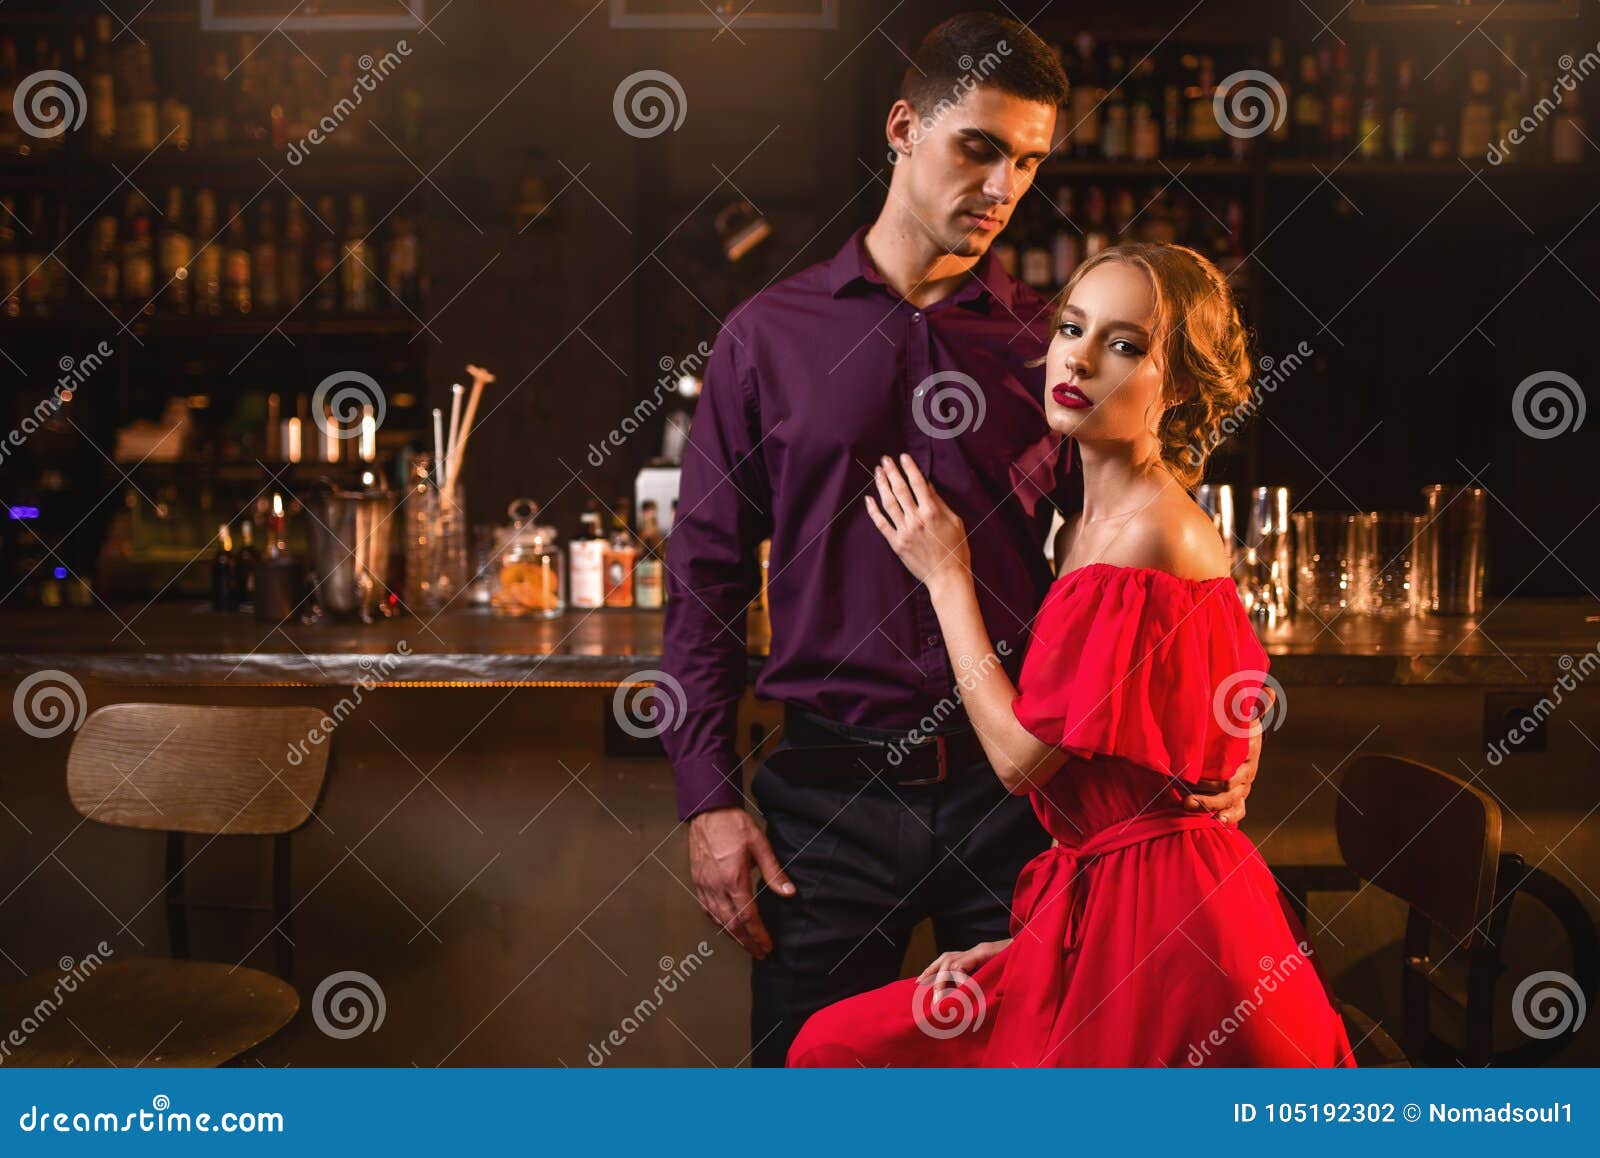 beautiful women red dress her men against bar counter date nightclub attractive love couple pub woman dress 105192302